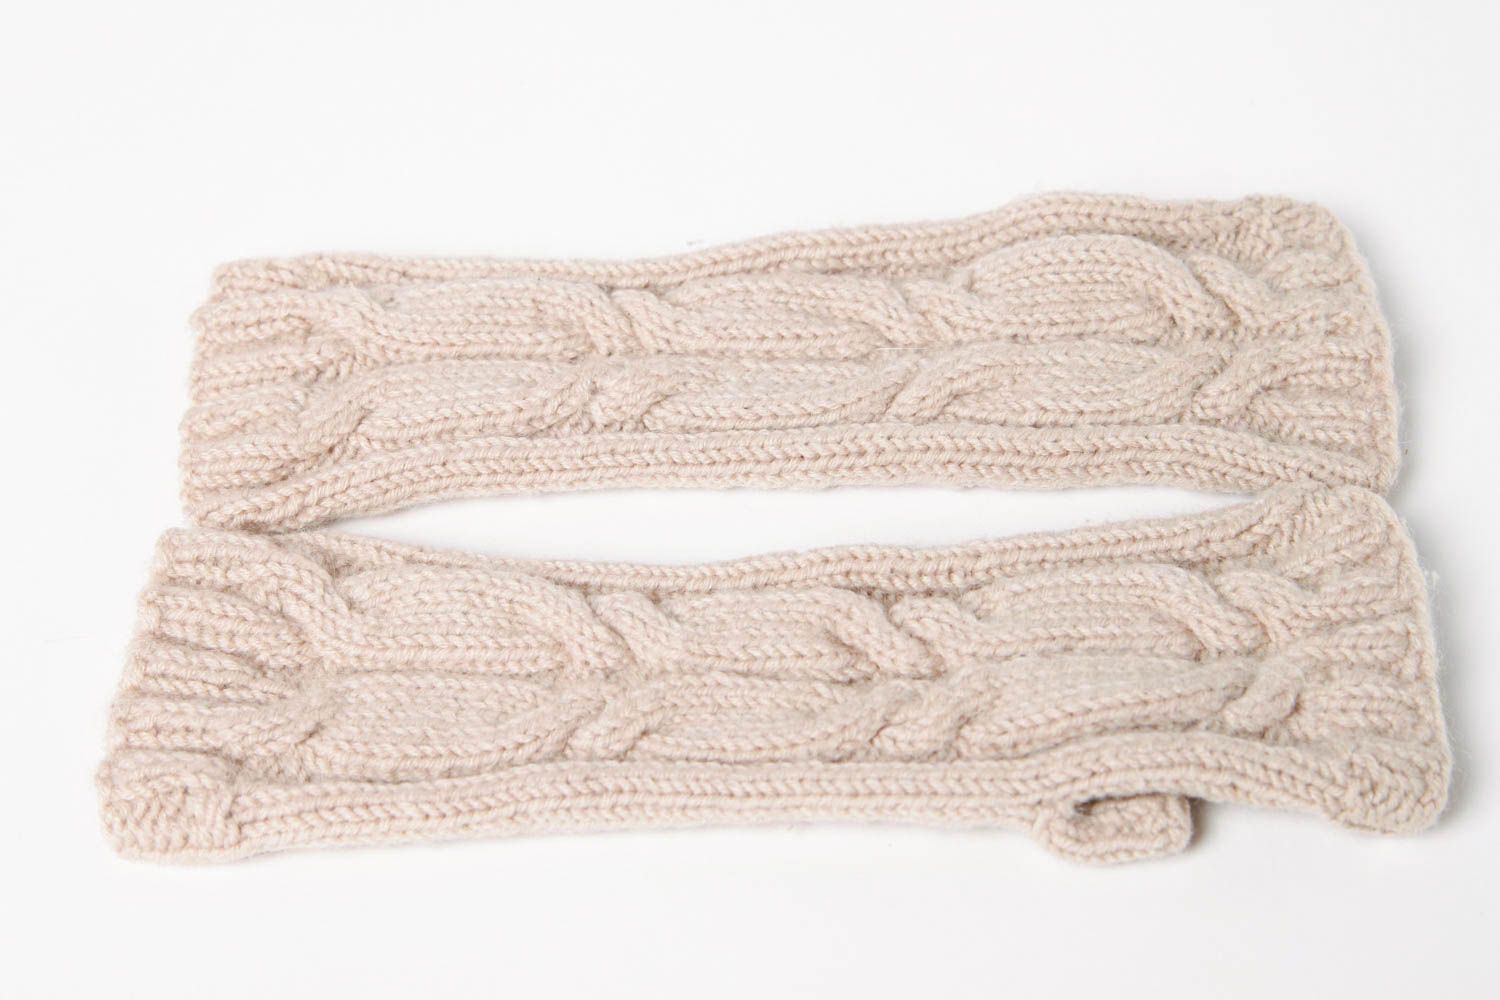 Handmade knitted mittens winter mittens winter accessories stylish mittens photo 8